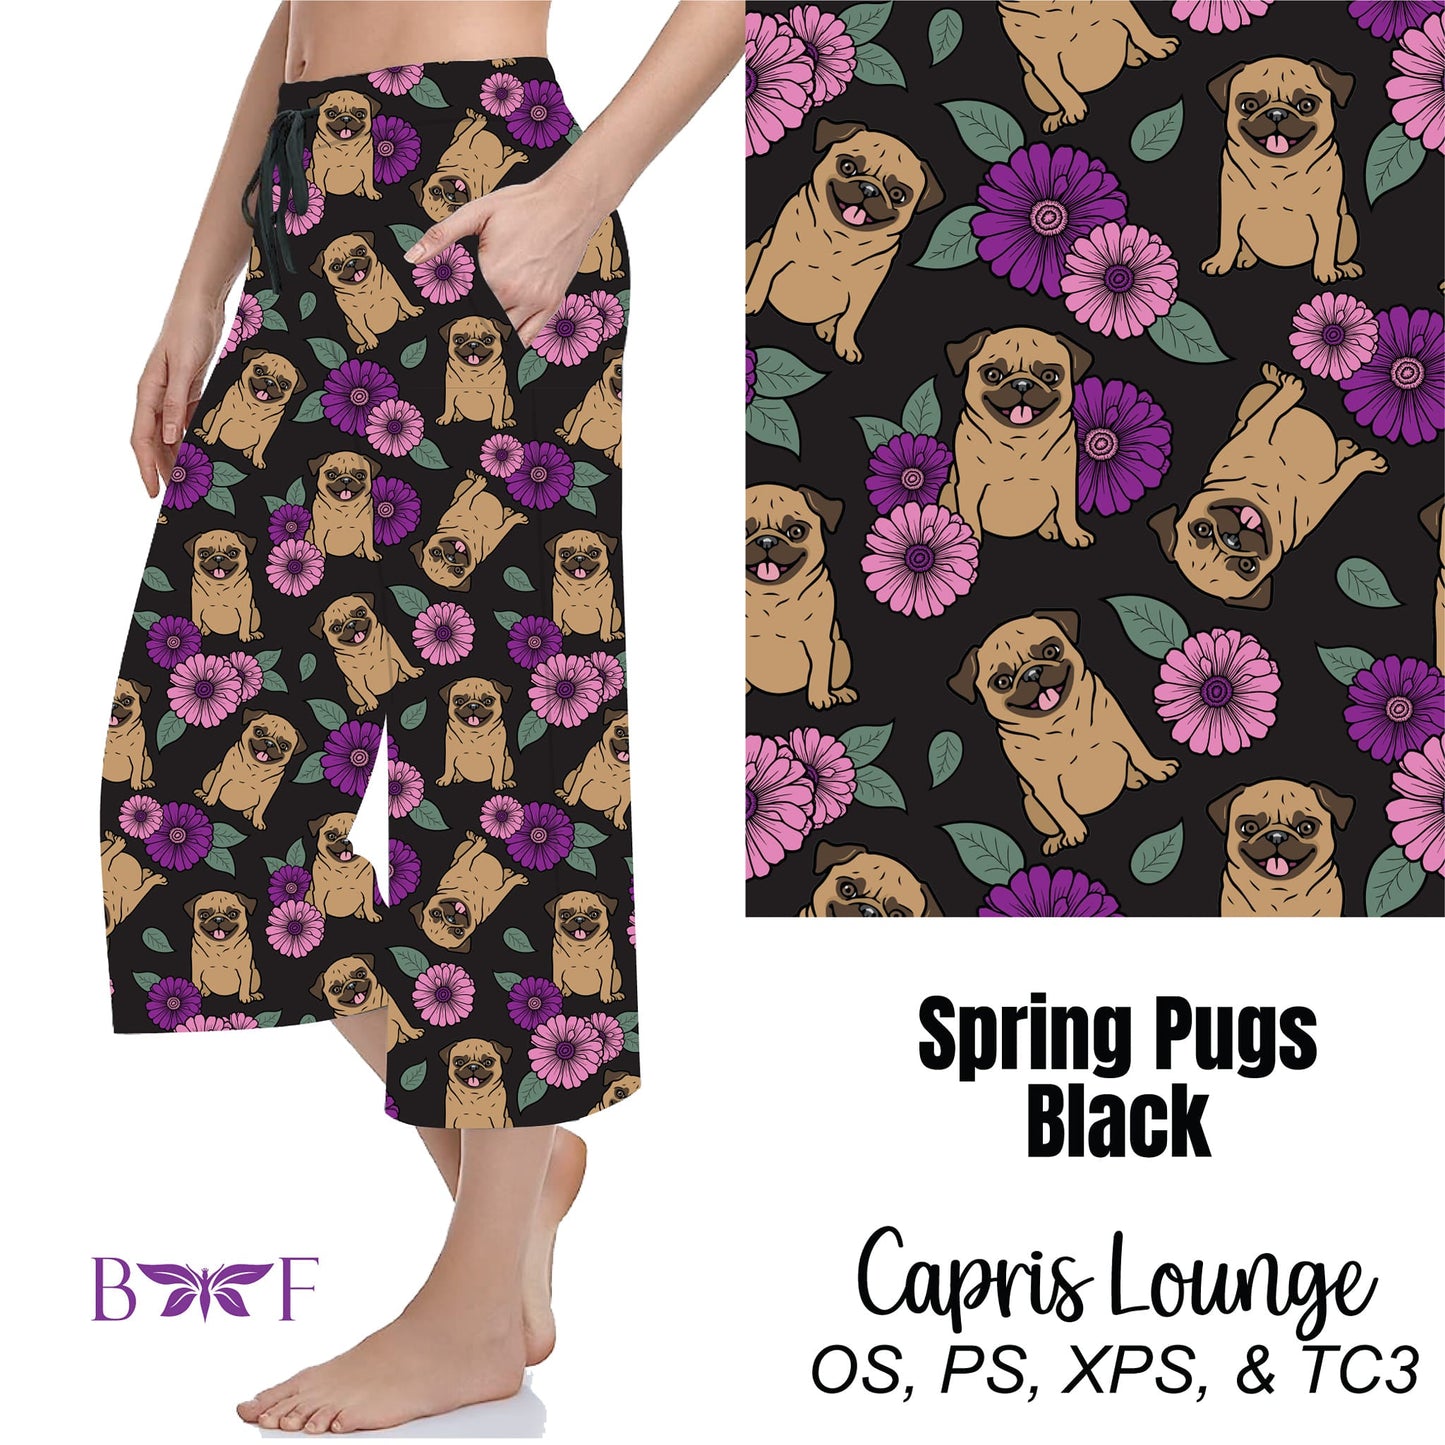 Spring Pugs Black Leggings and Capris